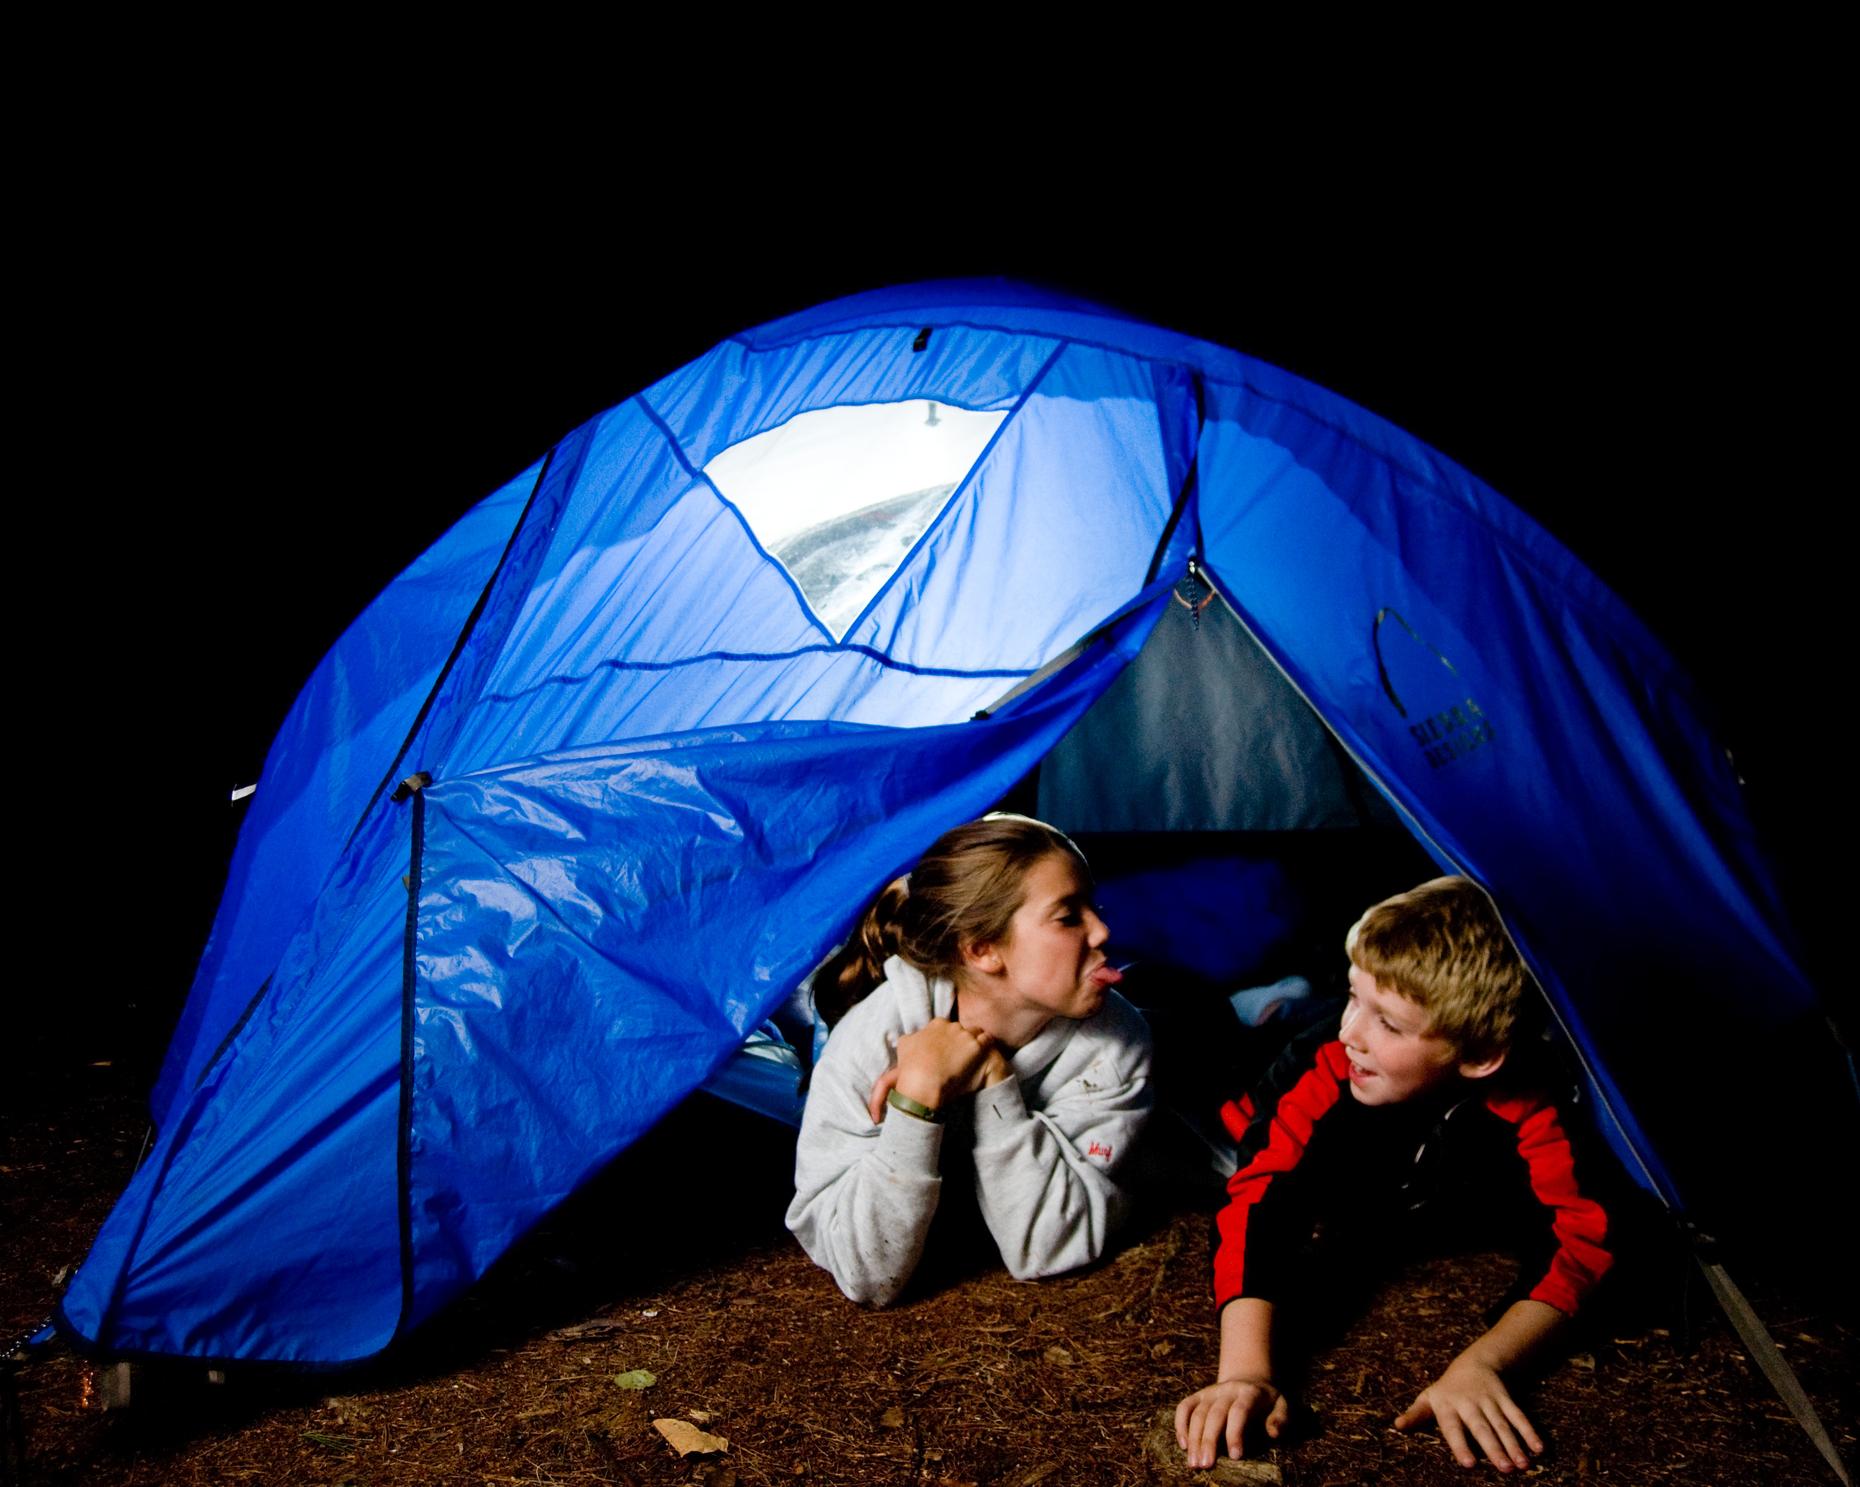 He is at camp. Палатка для подростка. Кемпинг Эстетика с палаткой. Кемпинг с семьей. Family Camping Night.